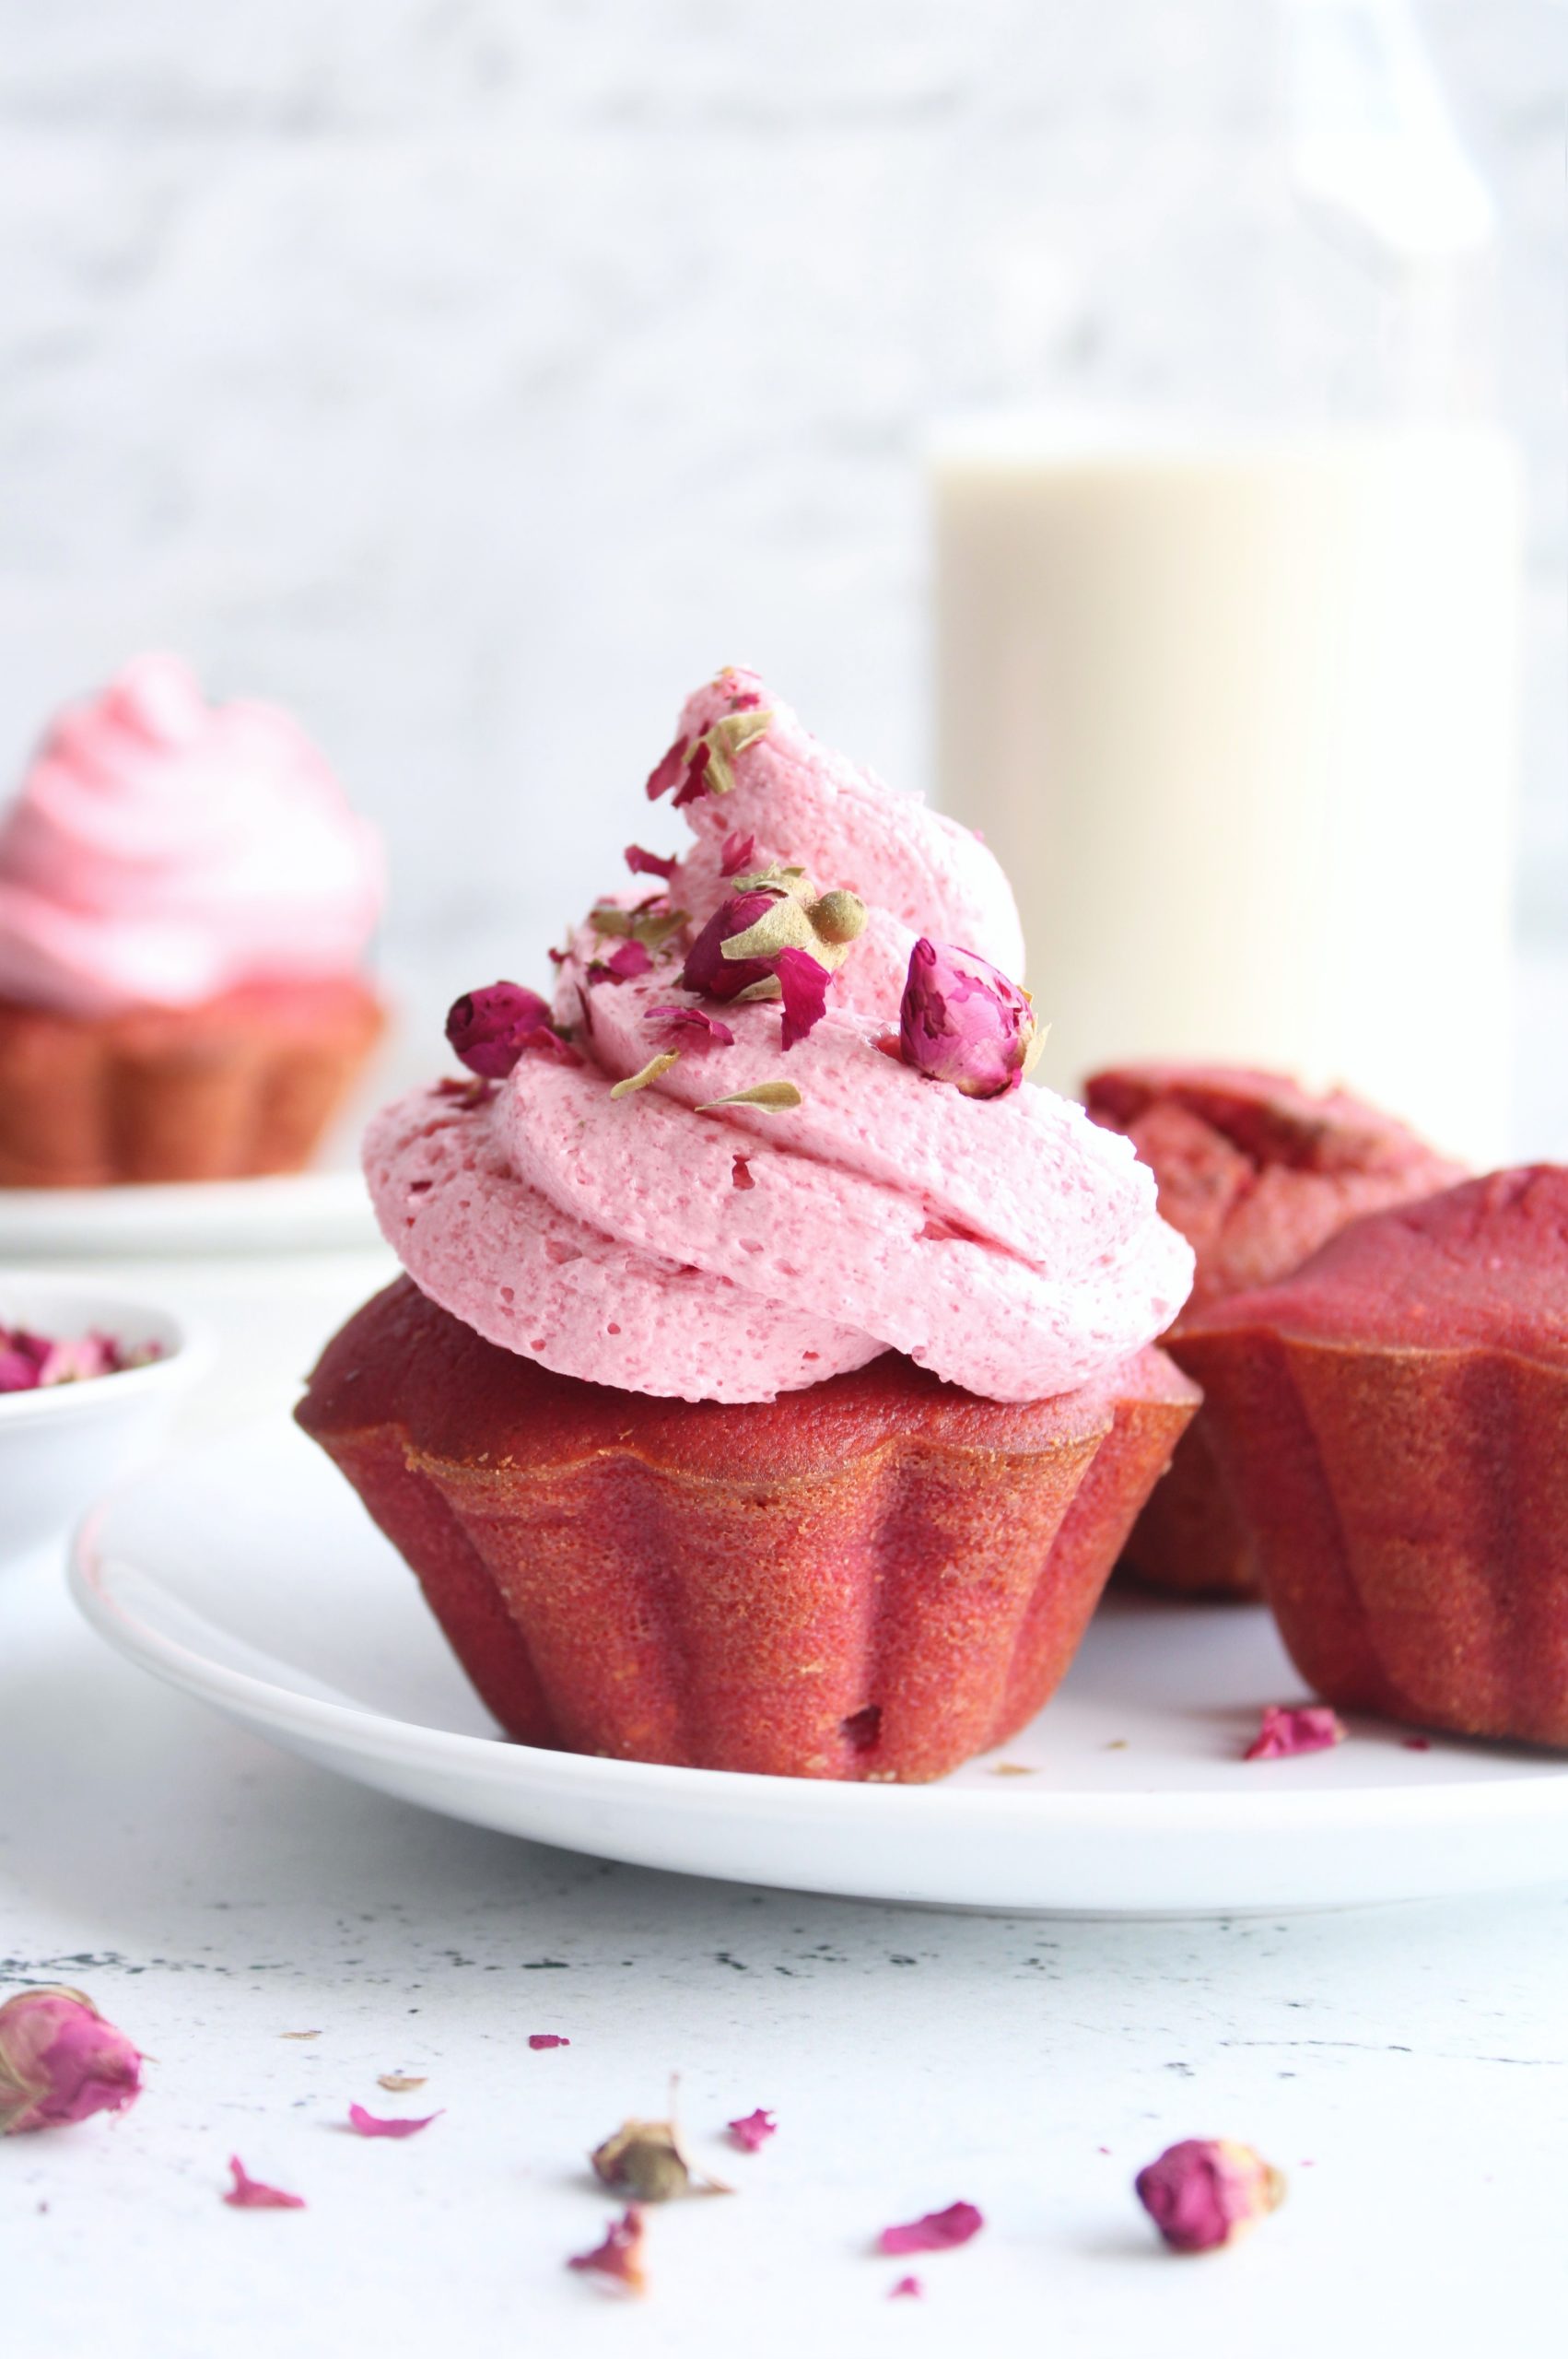 Cupcake rose et amandes - Recette de Cupcake